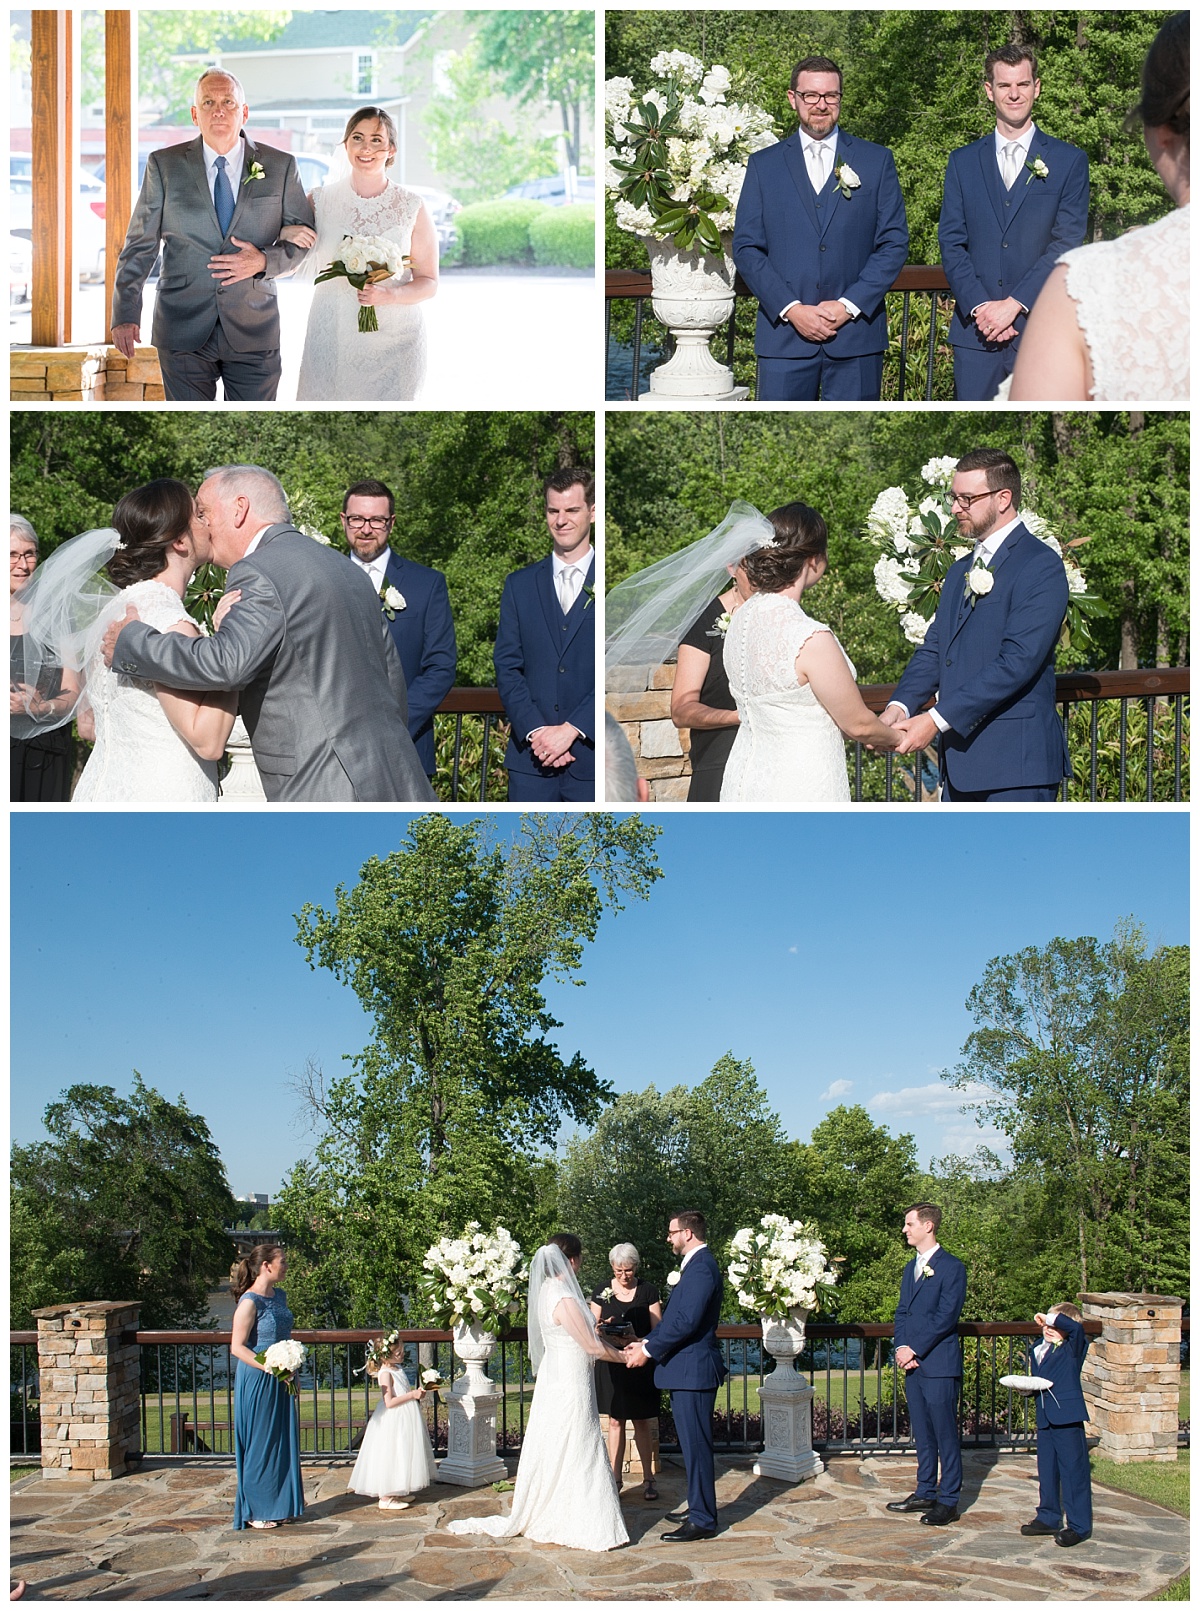 Stone River wedding ceremony